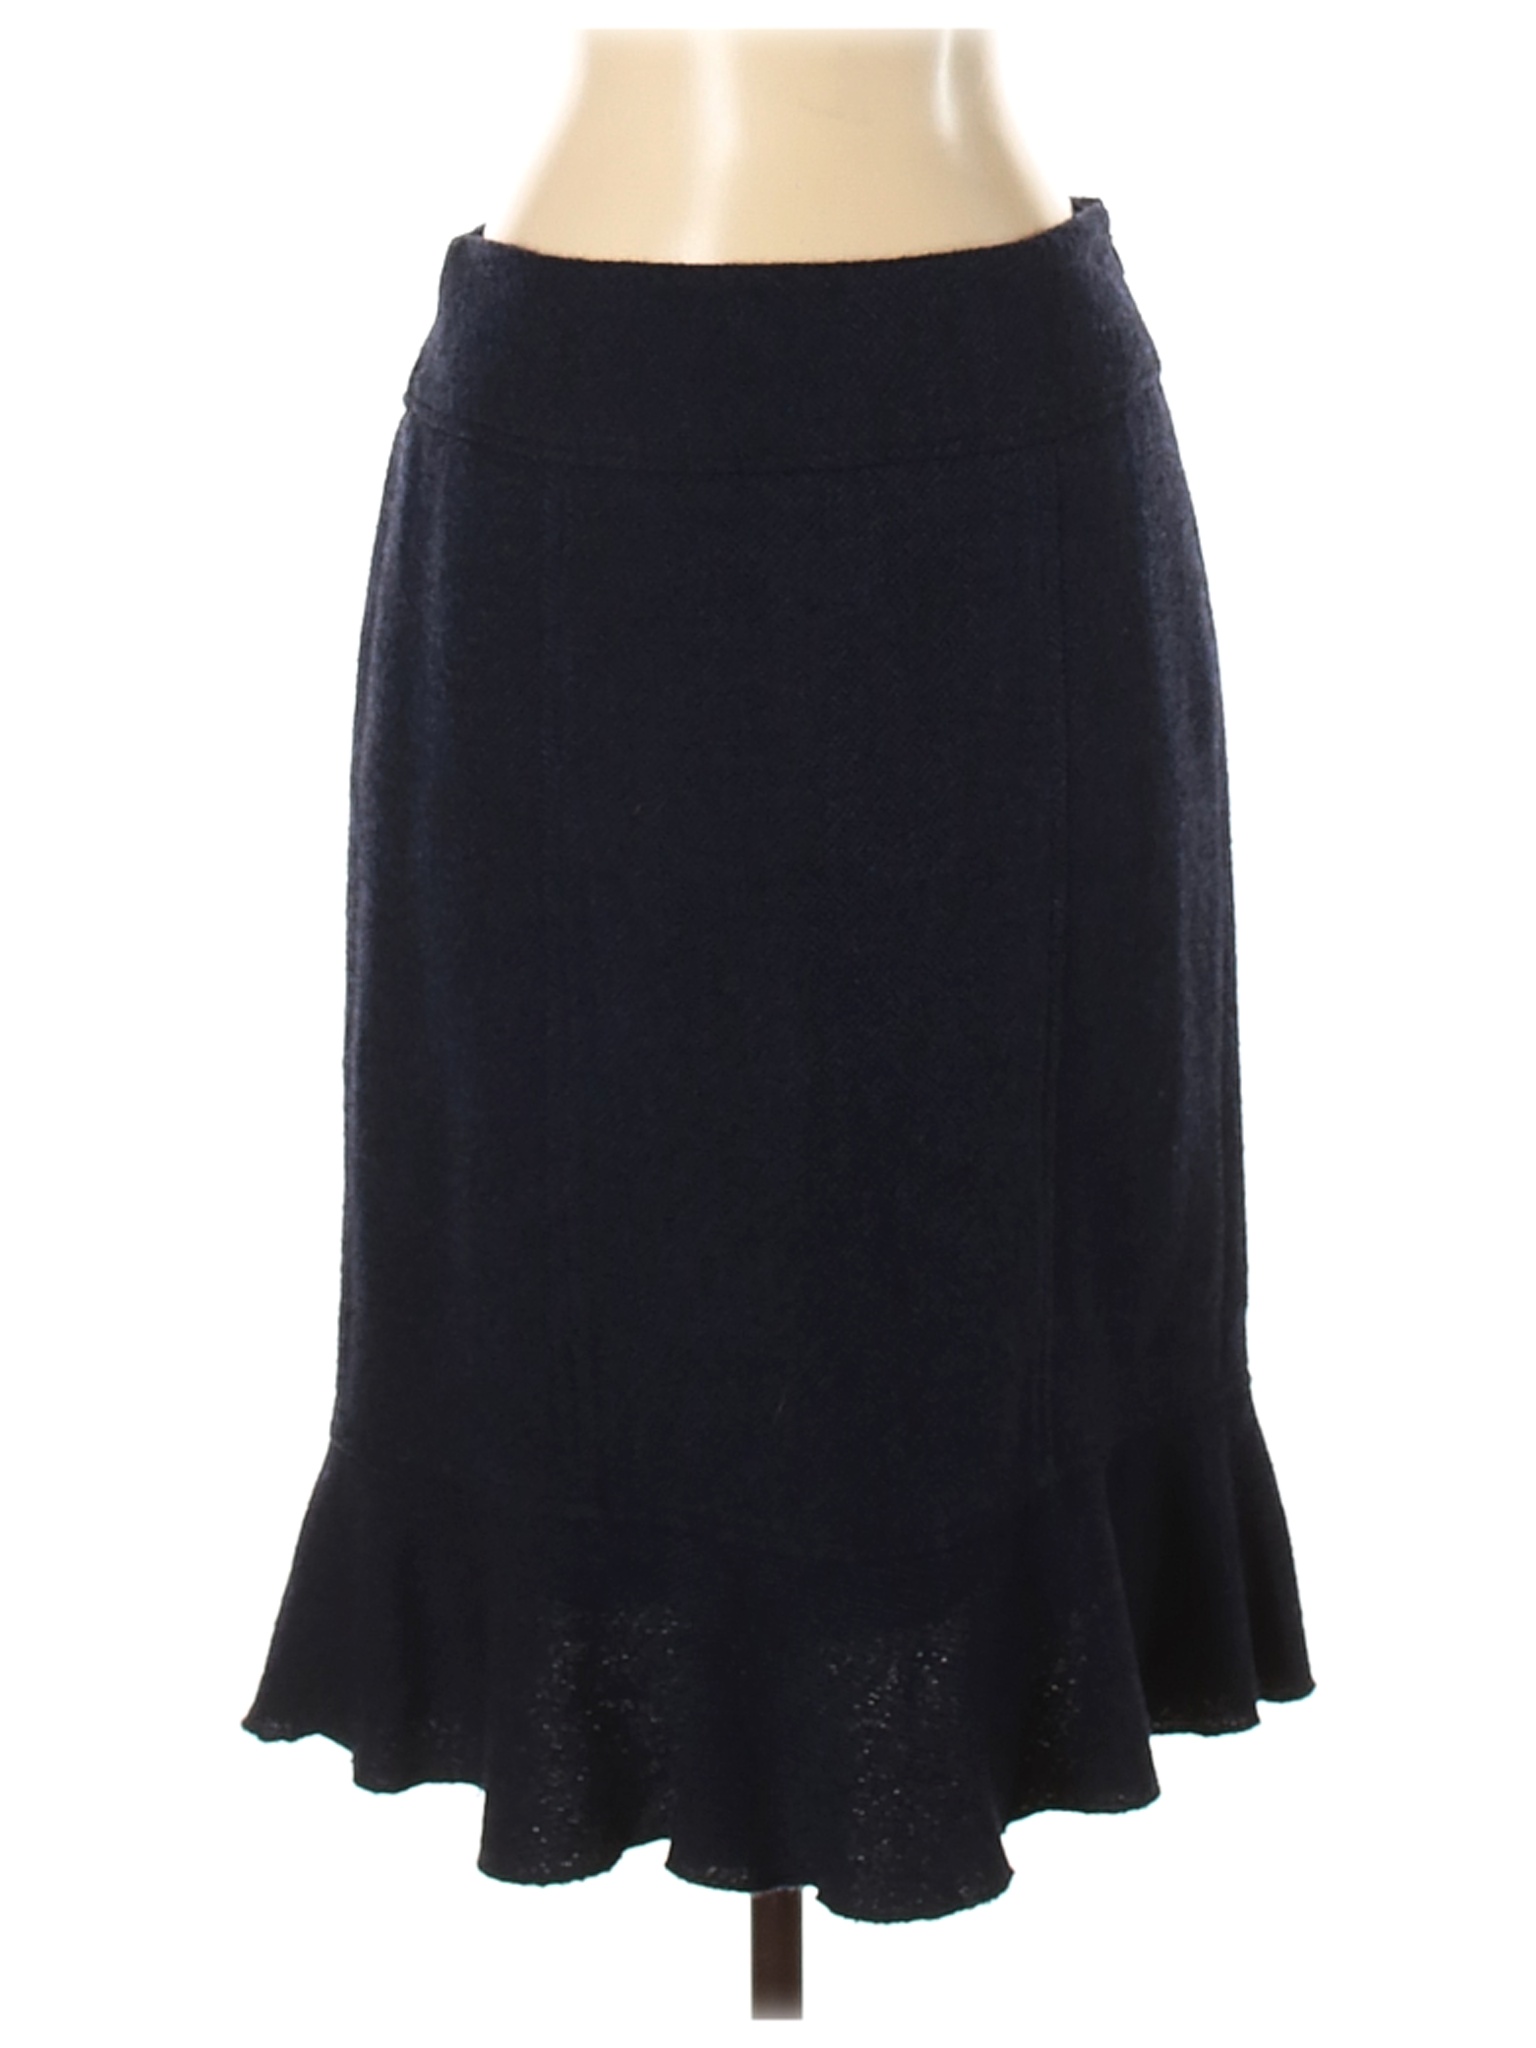 Ann Taylor Women Black Wool Skirt 2 | eBay